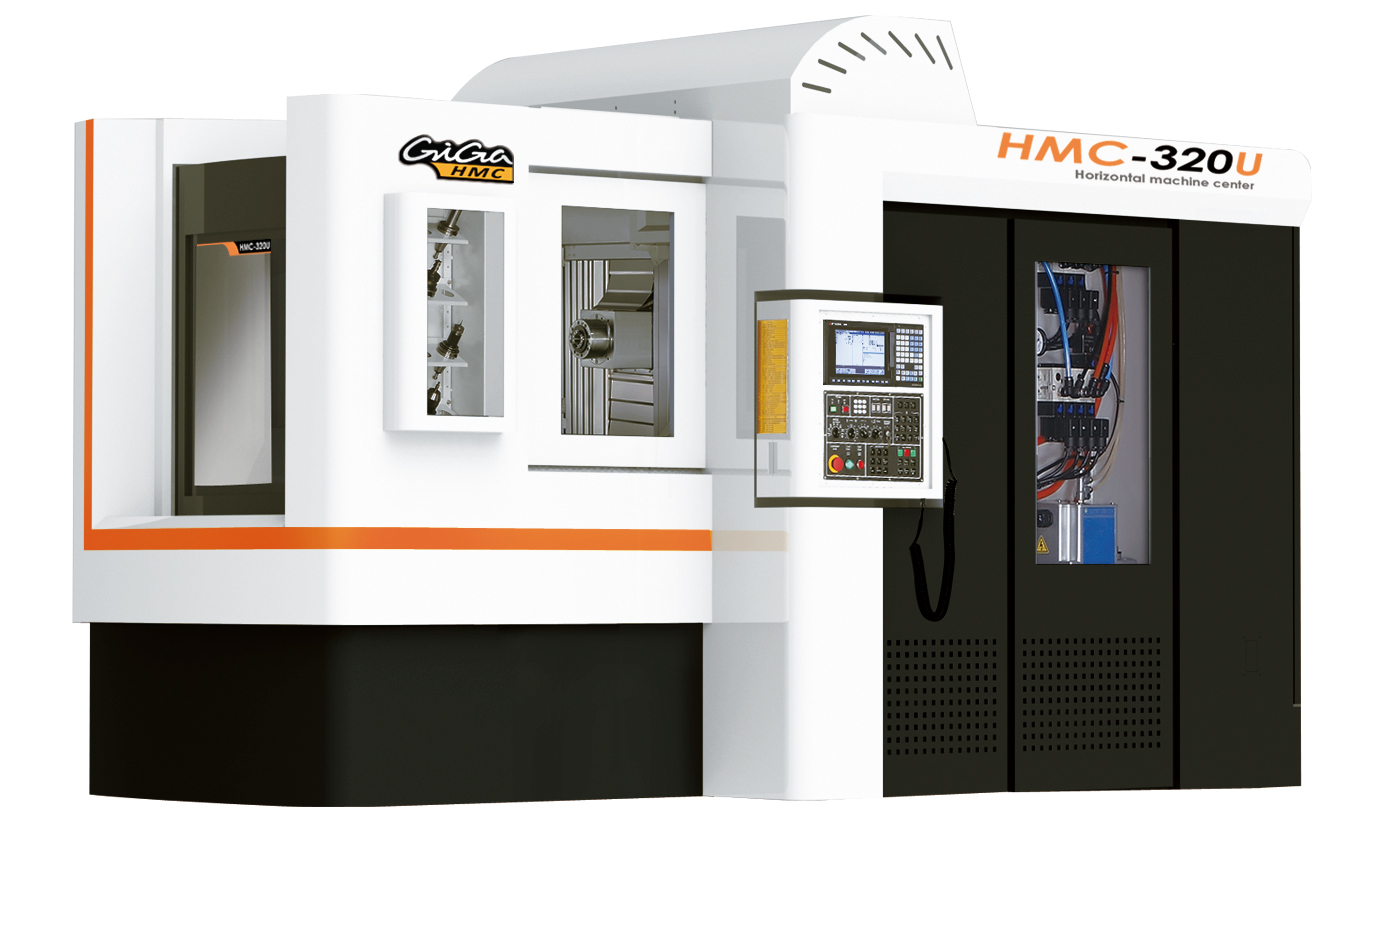 Products|HMC-320U CNC Horizontal Machining Center